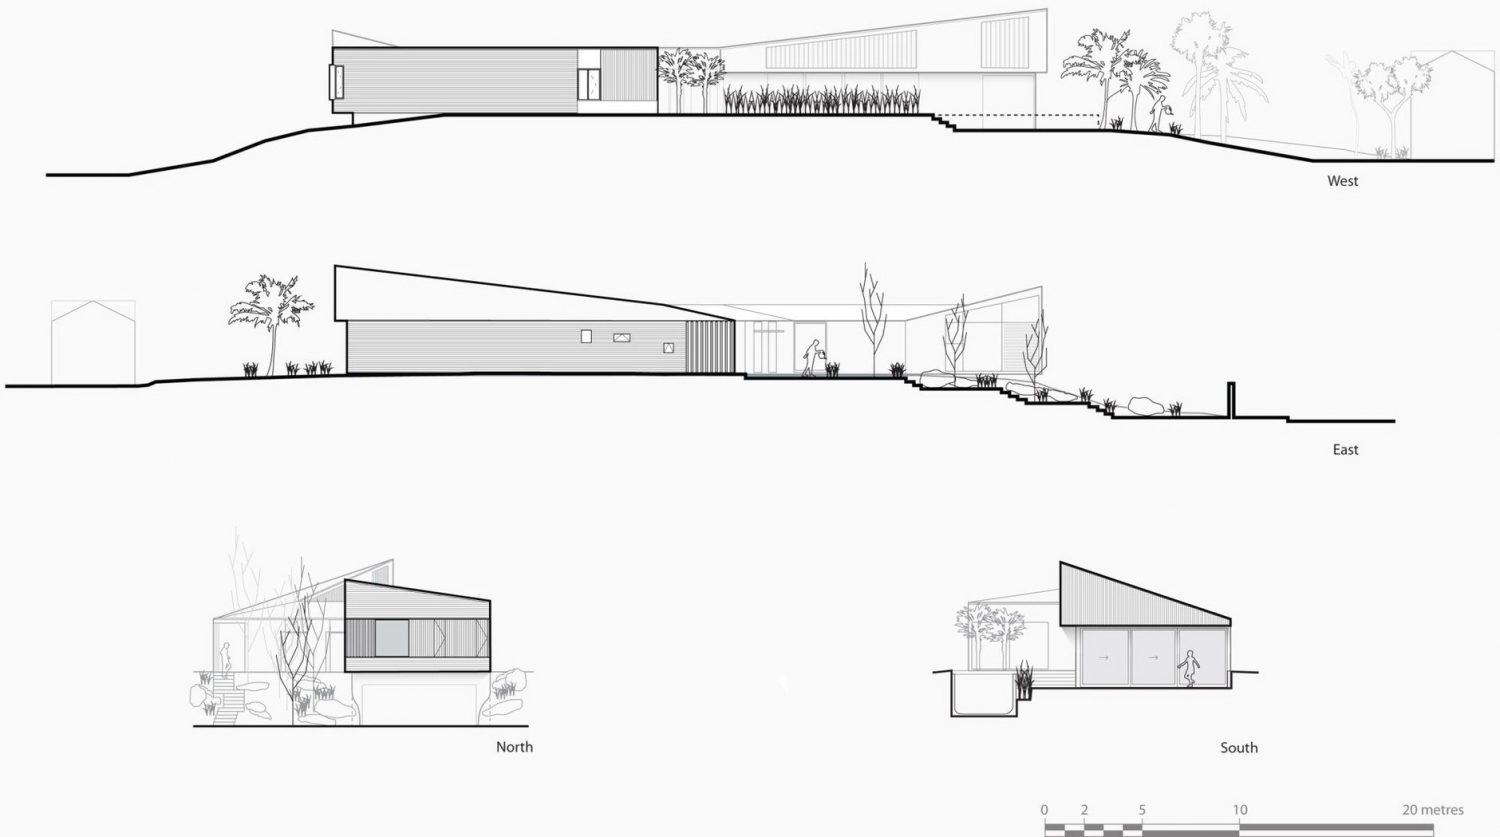 S House by Glamuzina Paterson Architects